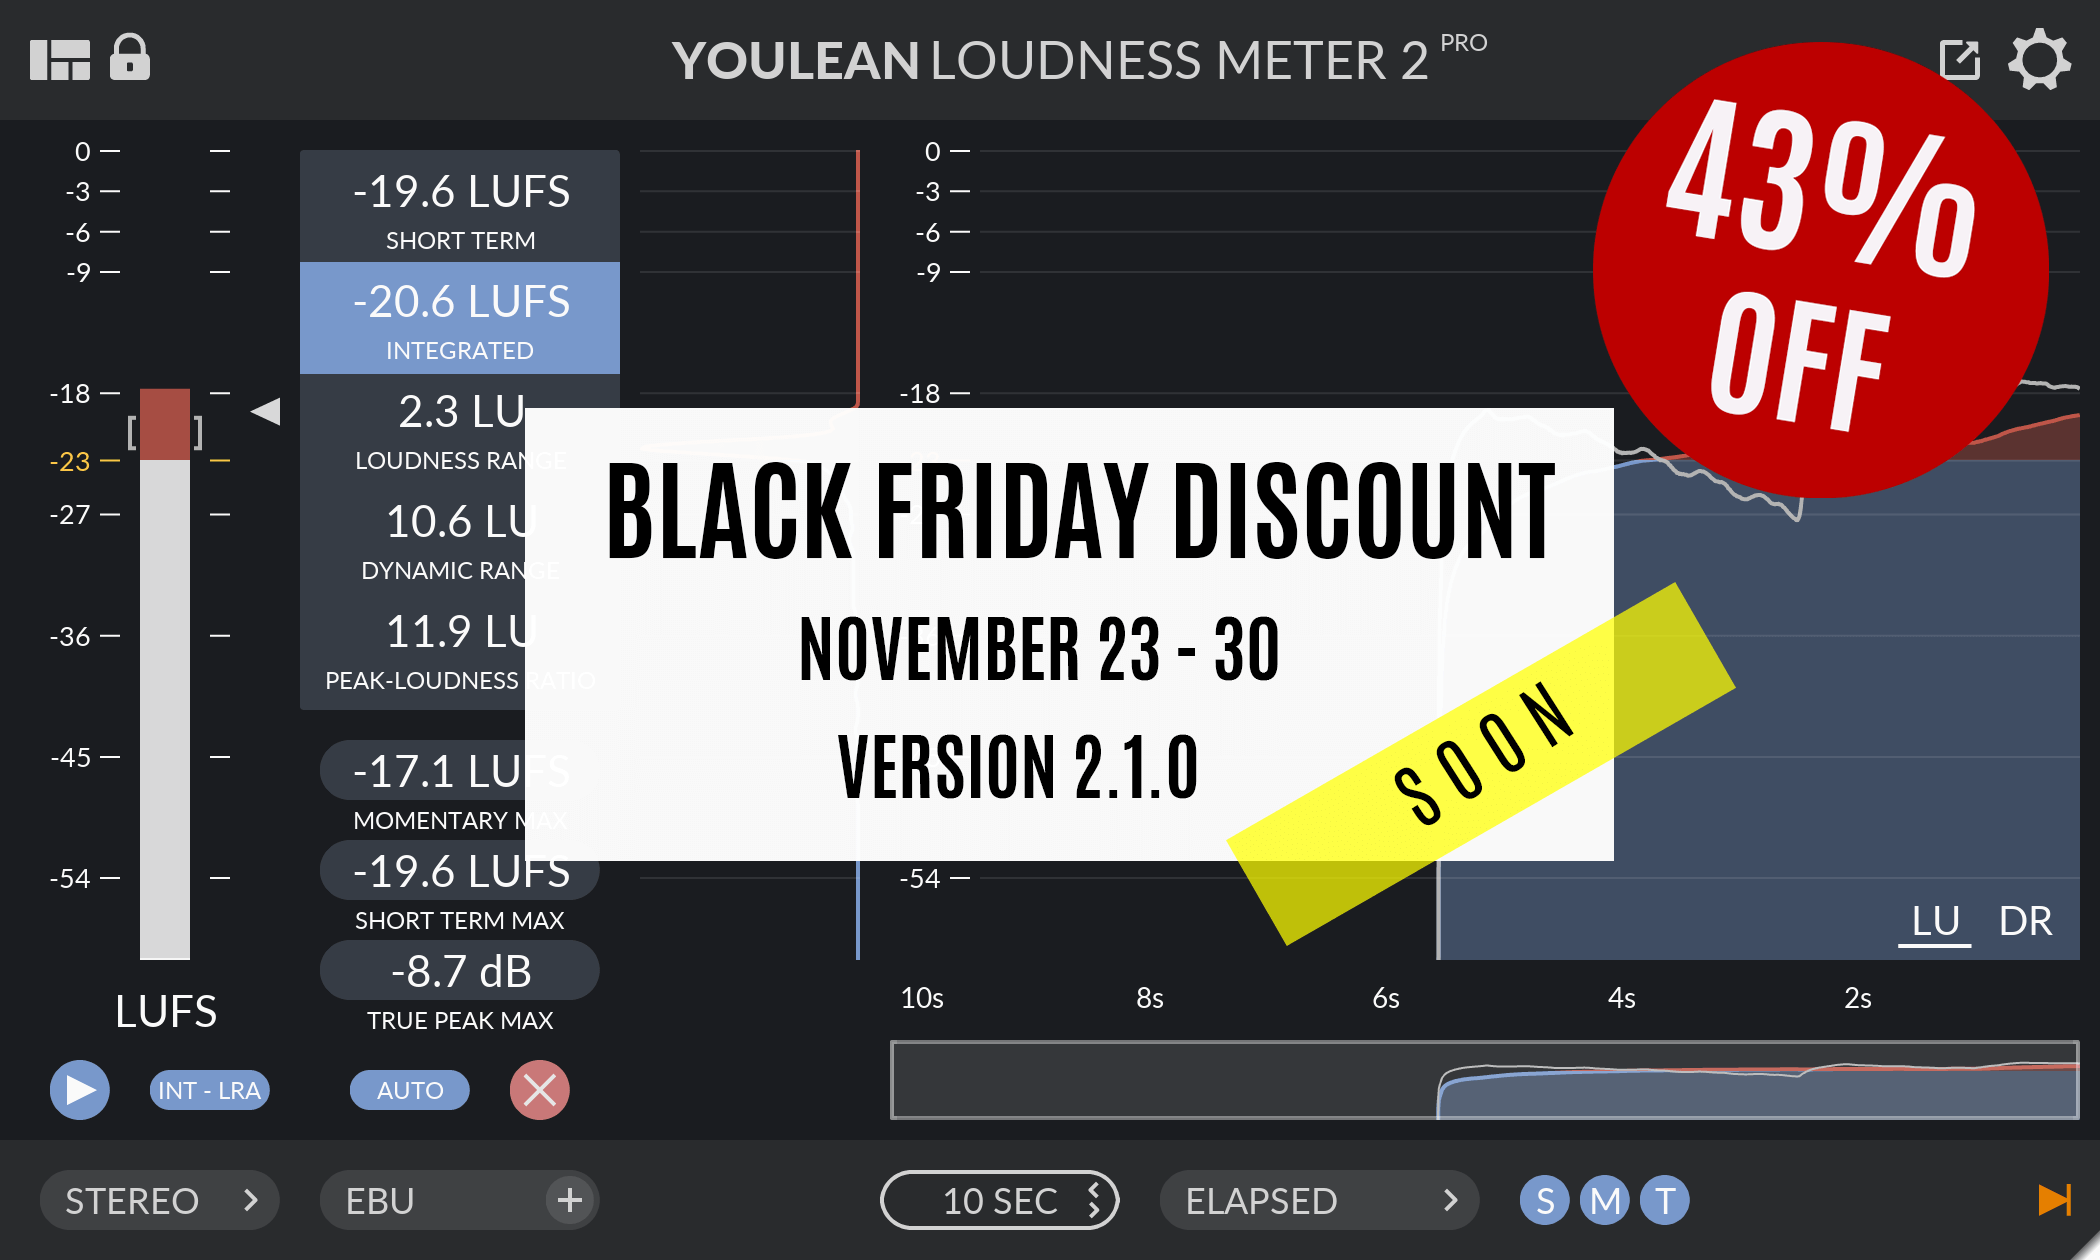 Moedig aan silhouet De waarheid vertellen Youlean Loudness Meter on sale for $27 USD this Black Friday